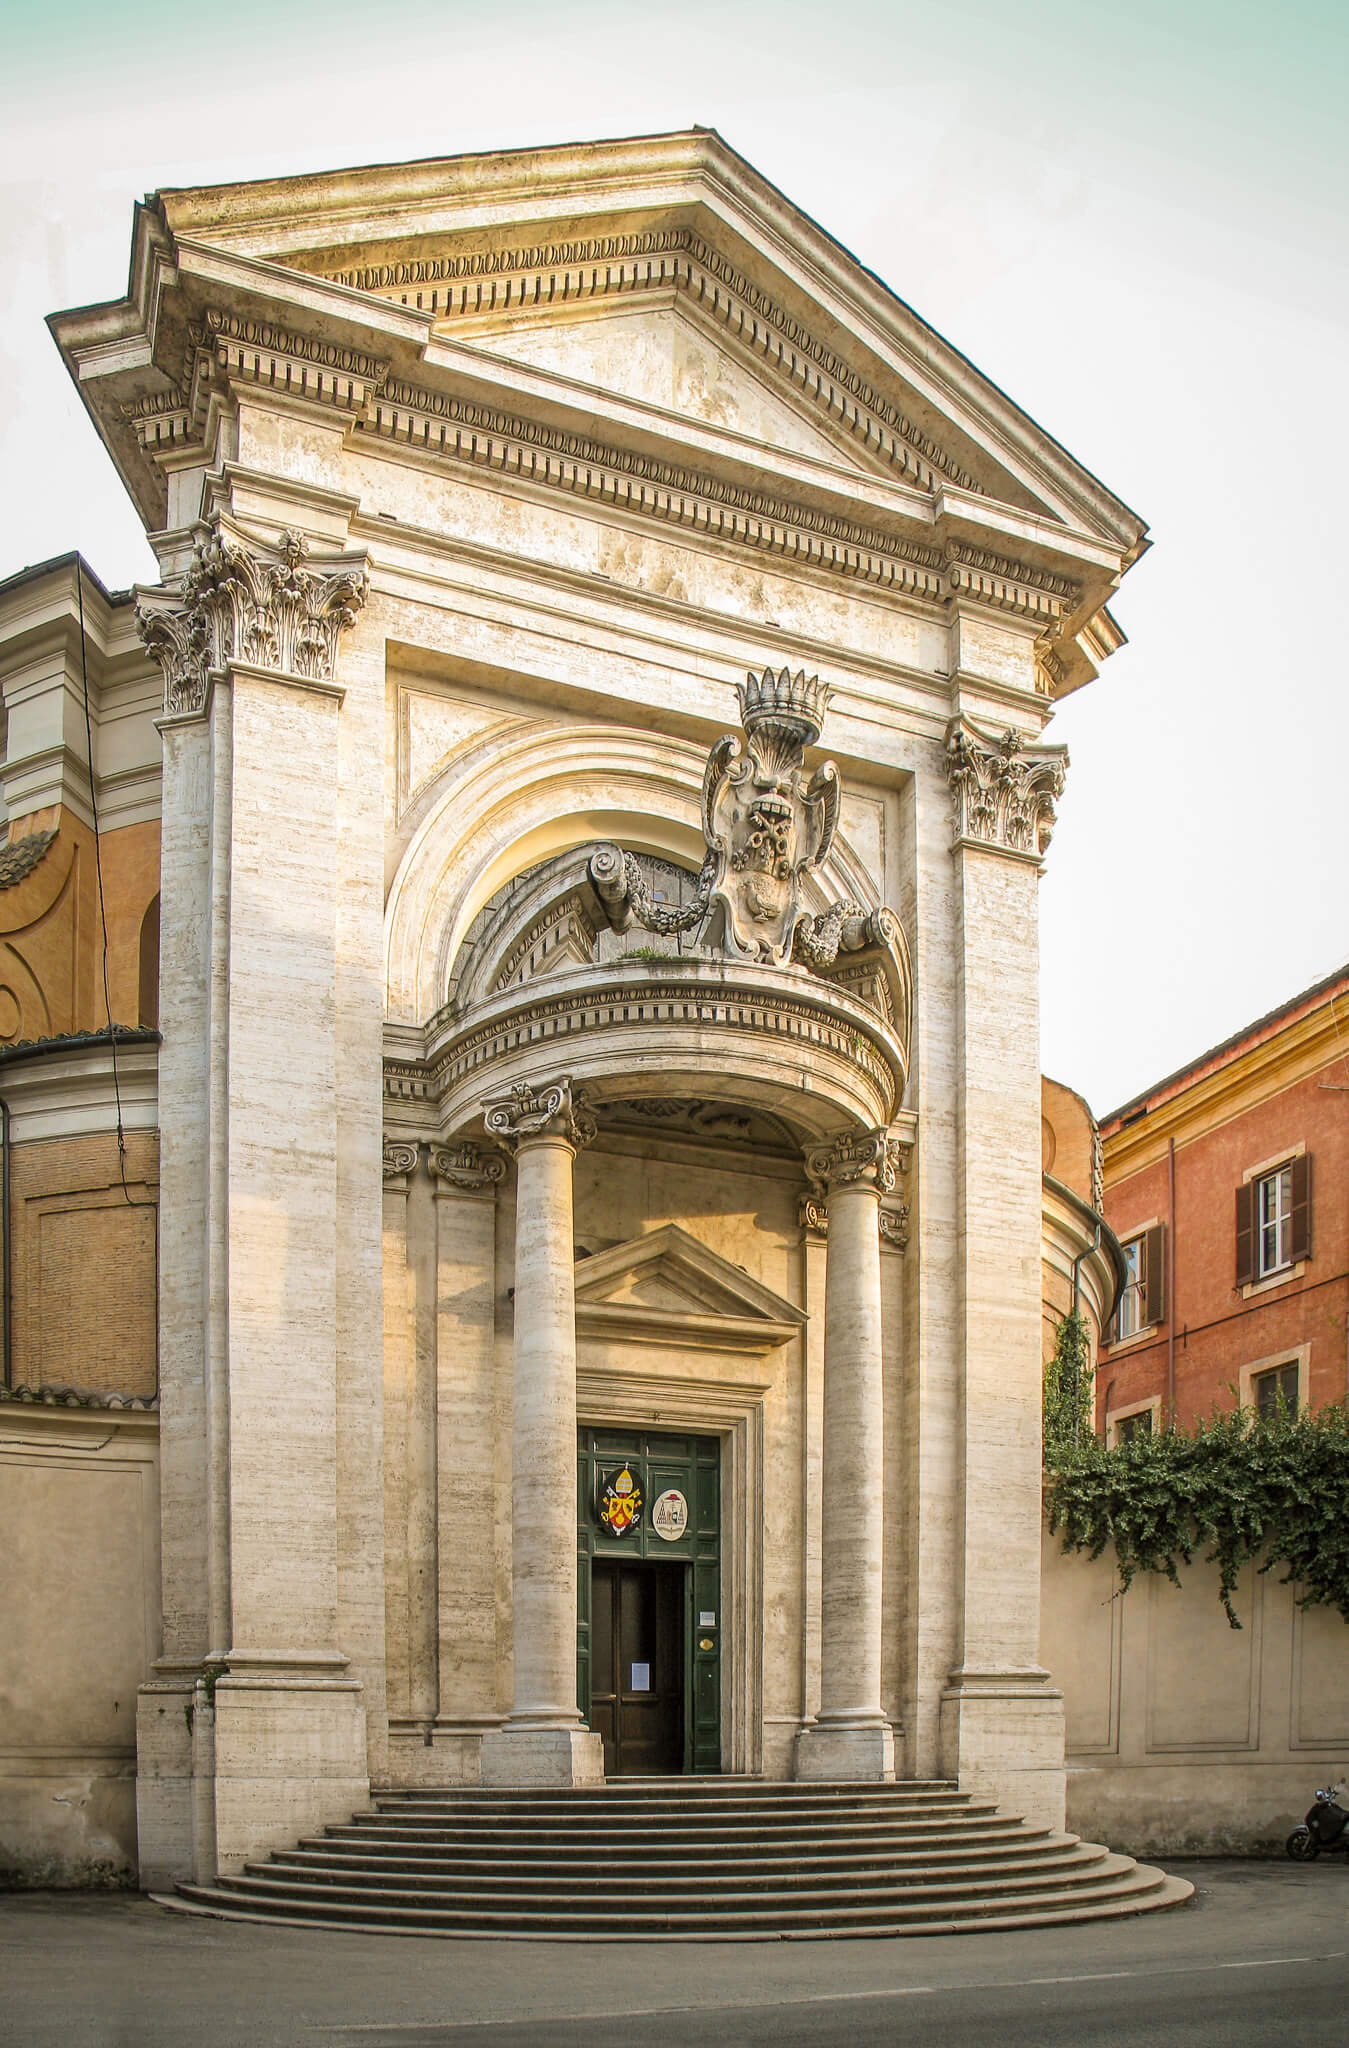 The facade of Sant'Andrea al Quirinale